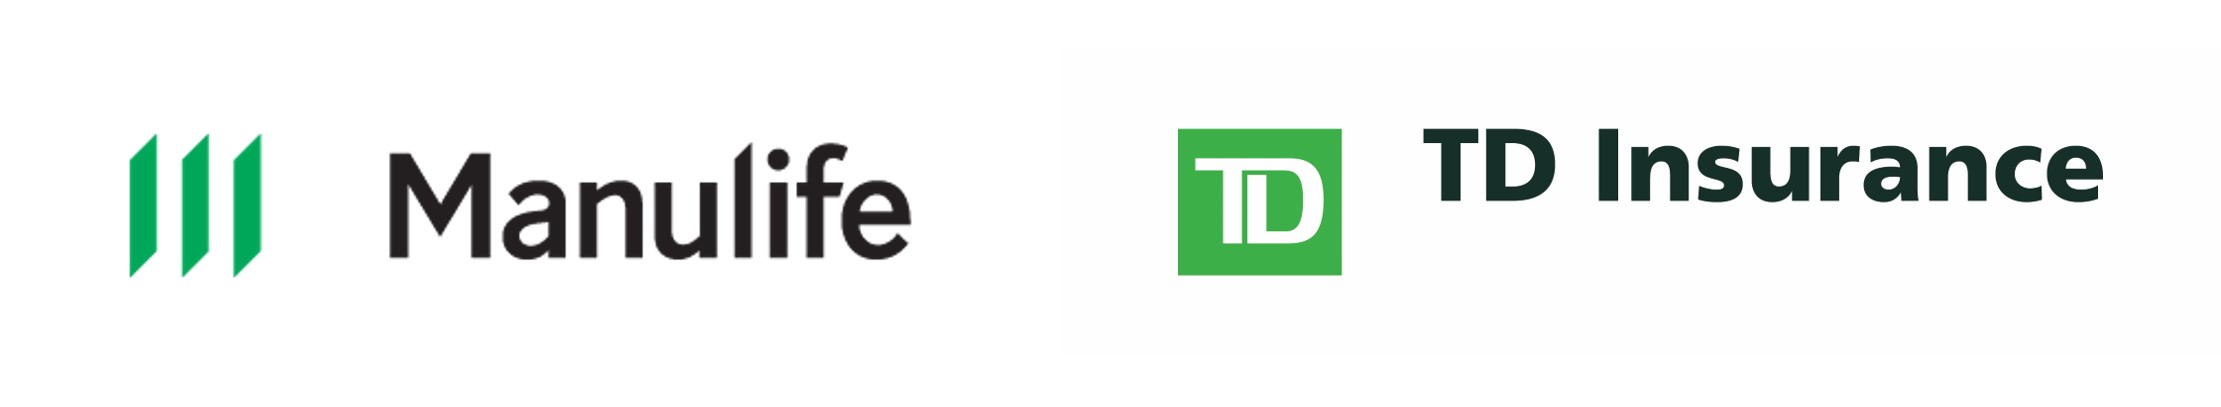 Manulife and TD Insurance logos